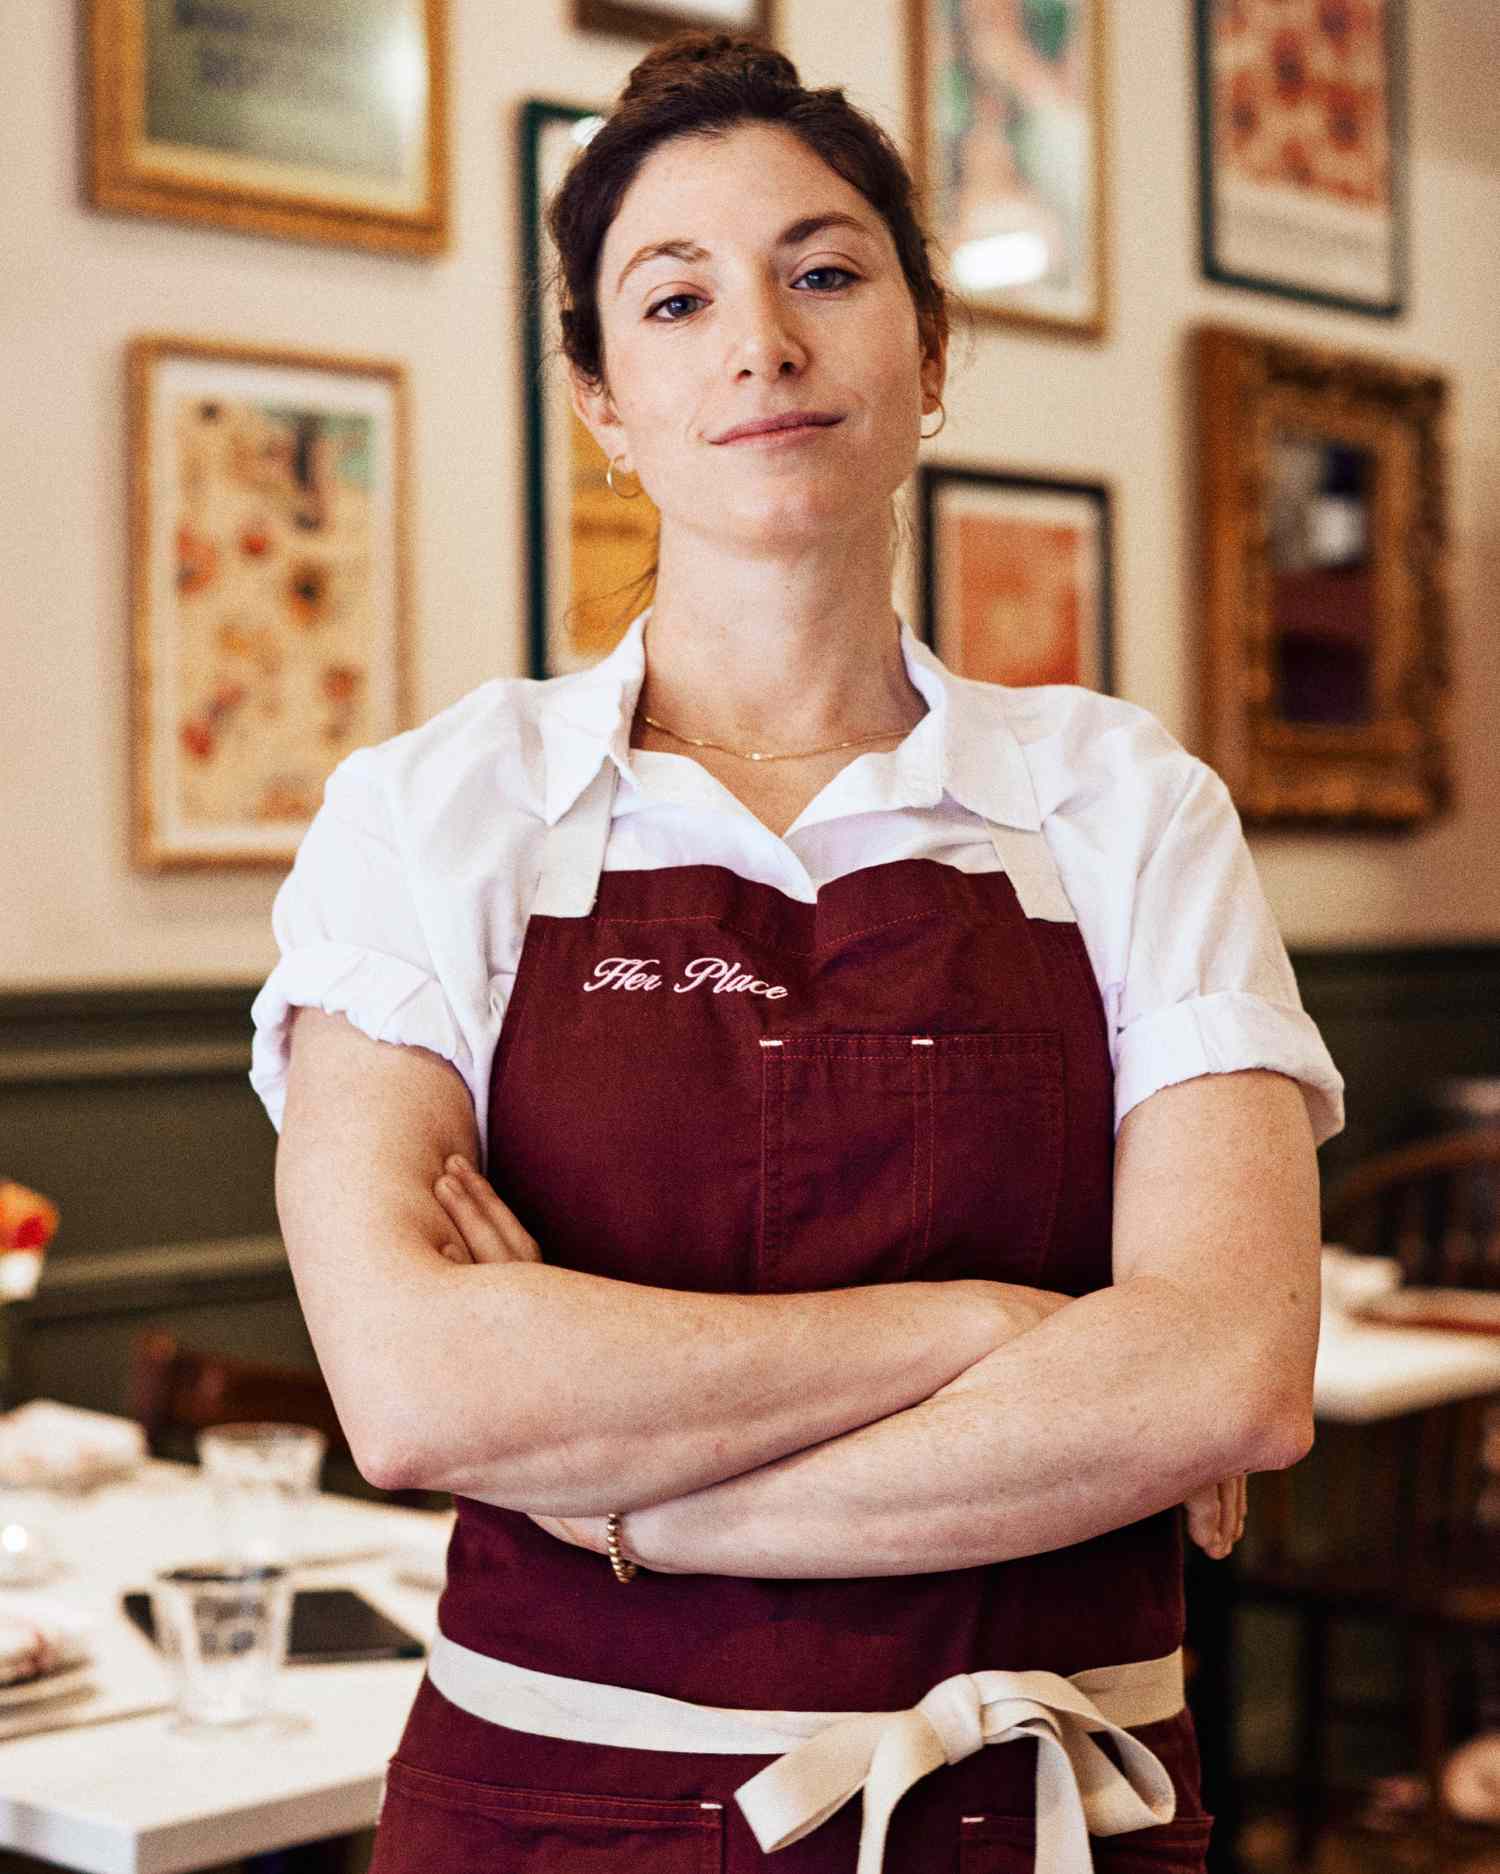 Best New Chef Amanda Shulman